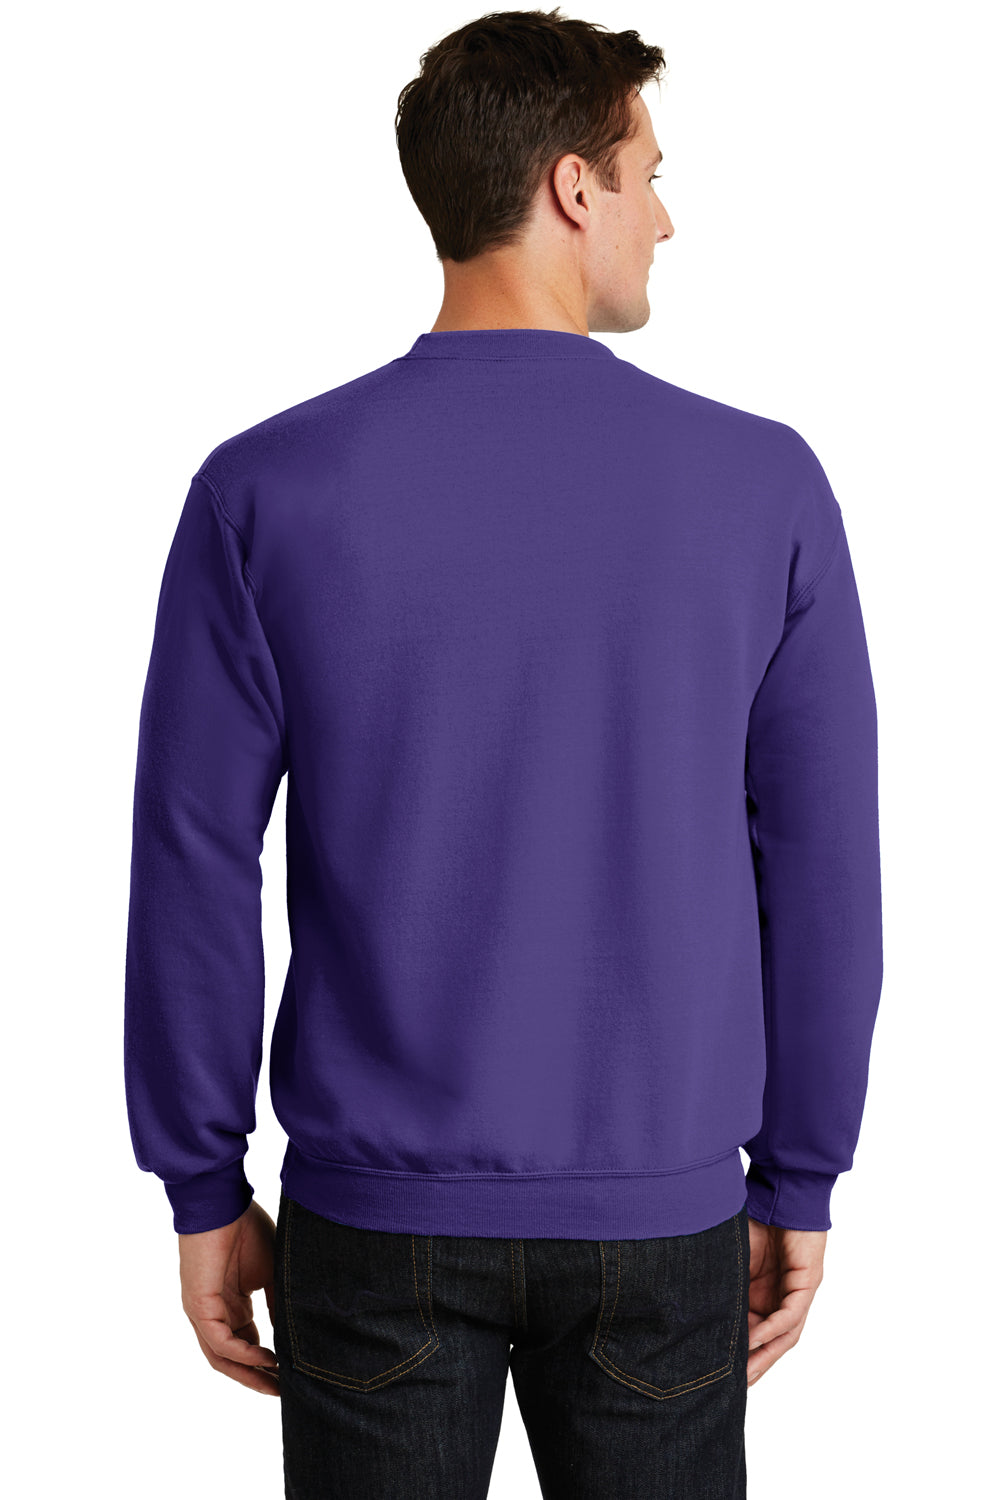 Port & Company PC78 Mens Core Fleece Crewneck Sweatshirt Purple Back